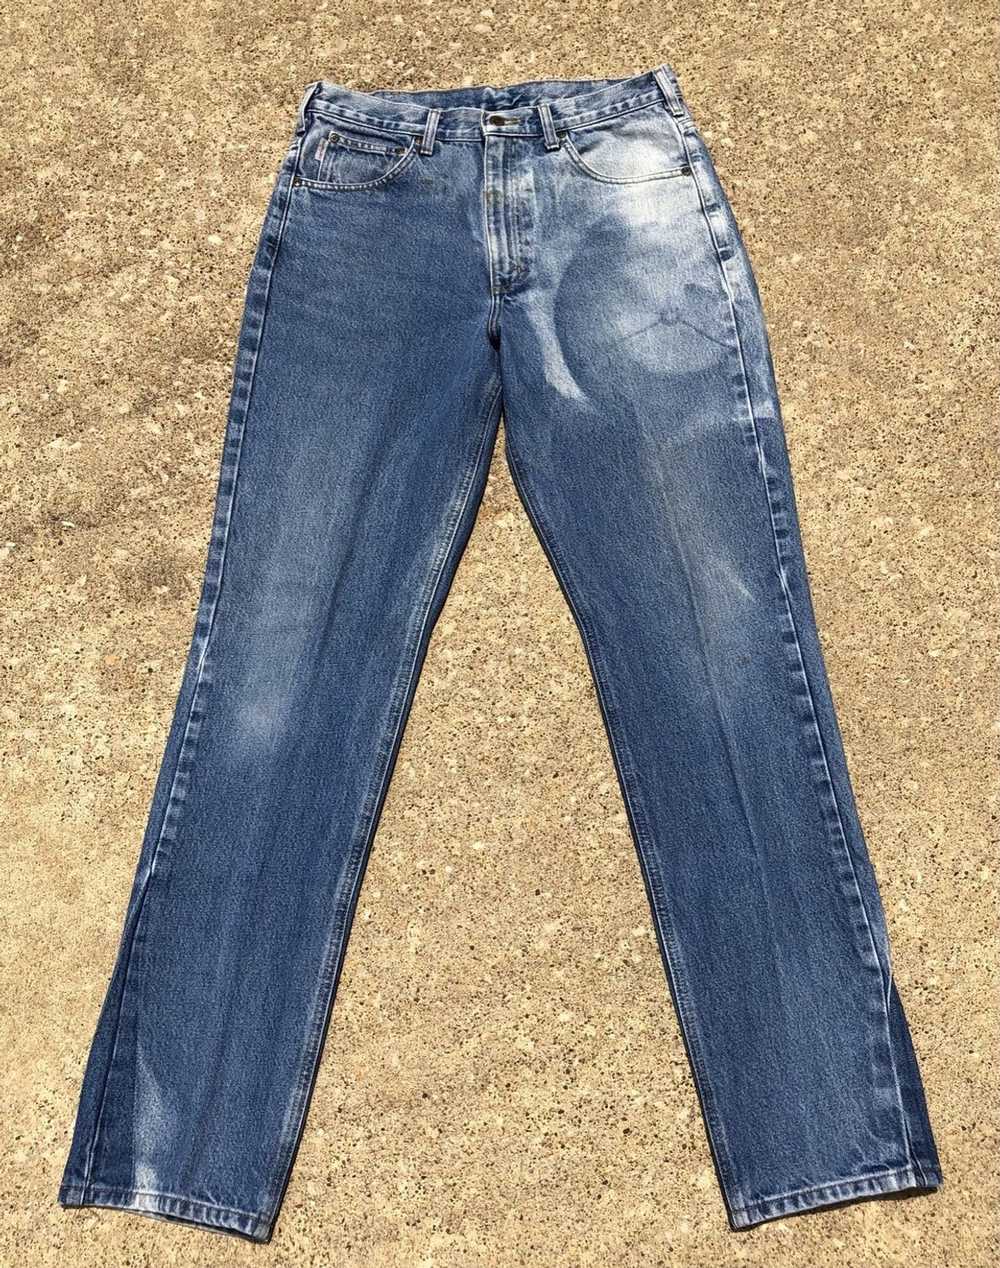 Carhartt Vintage Faded Carhartt Jeans - image 2